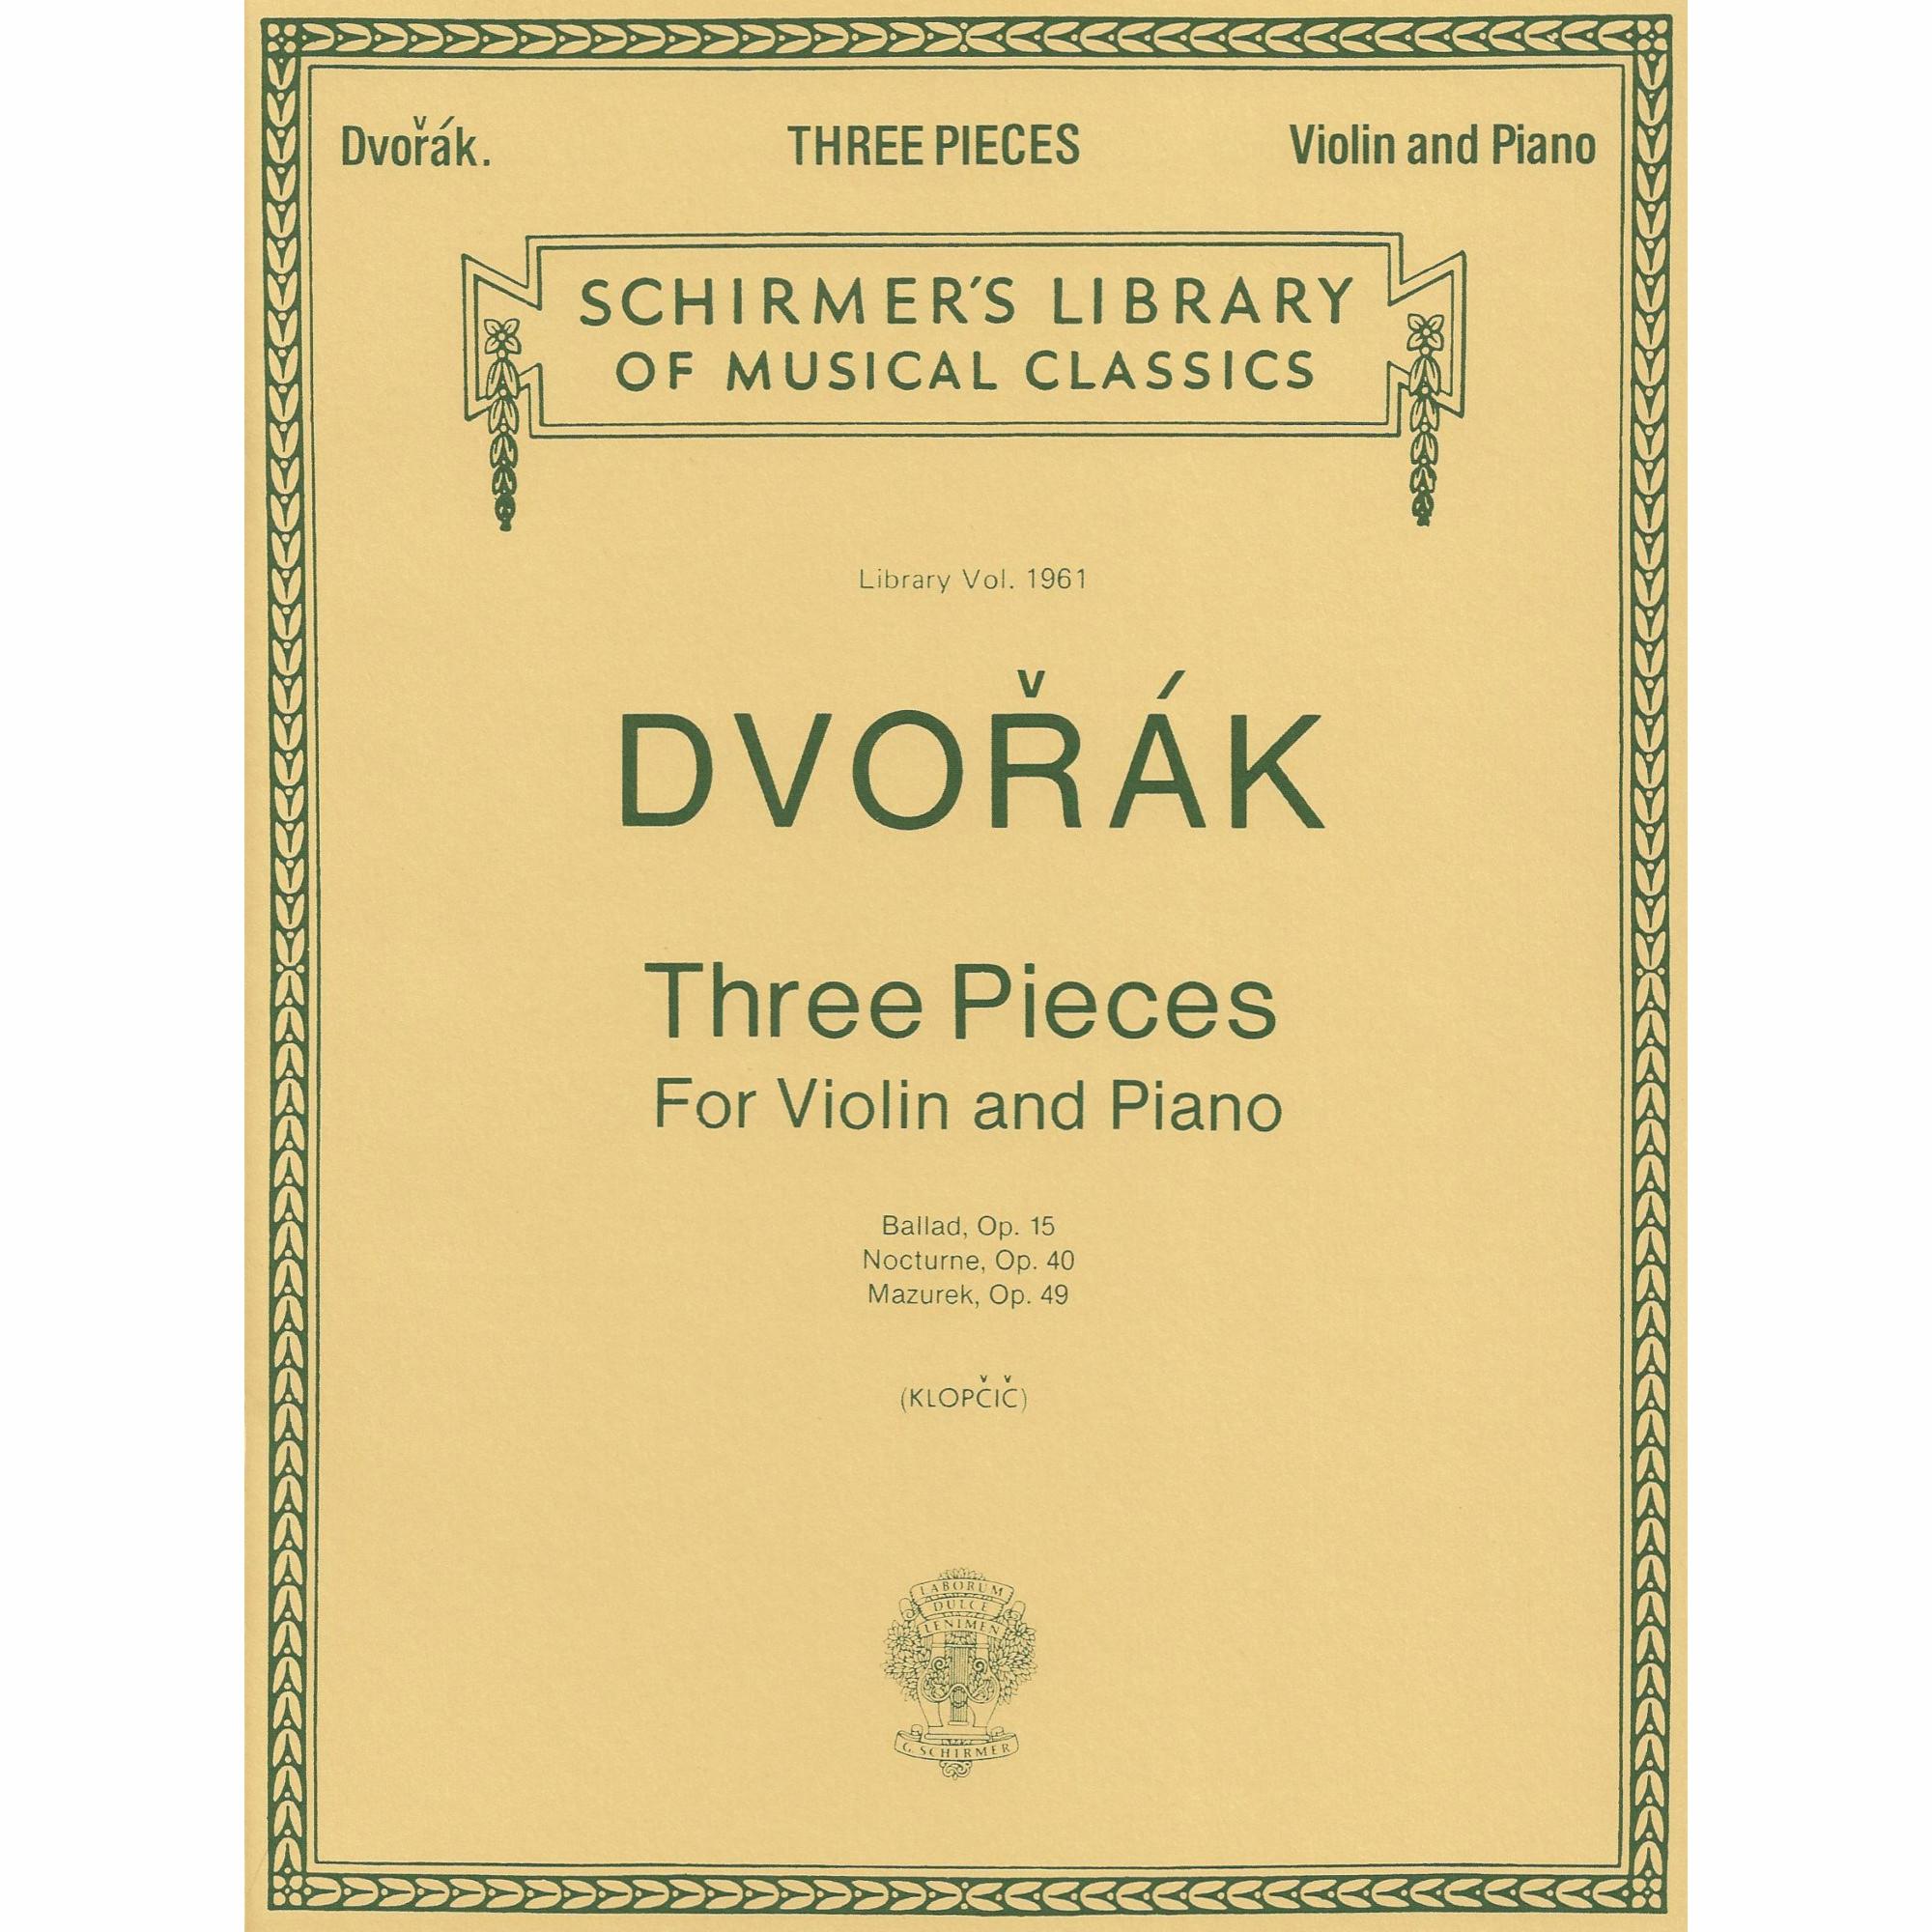 Dvorak -- Three Pieces for Violin and Piano